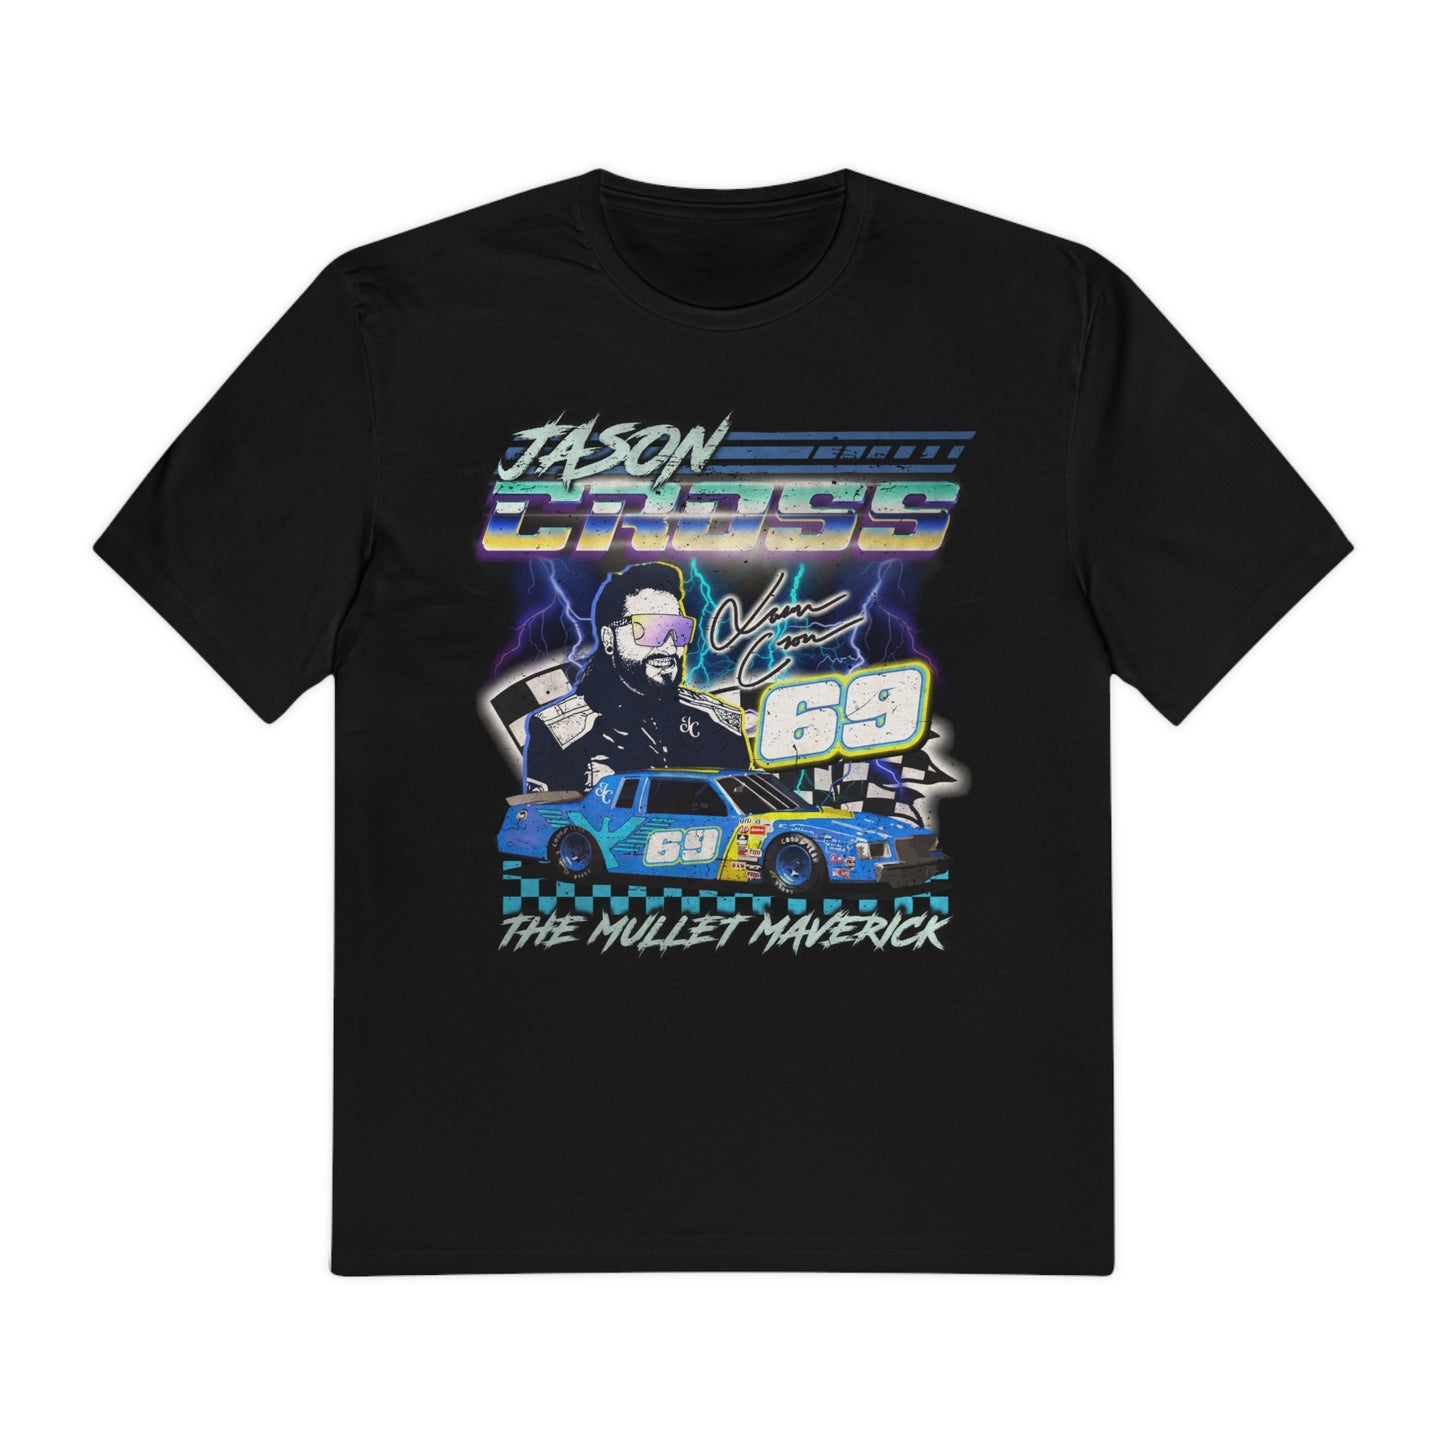 Jason Cross Nascar T-Shirt - The Mullet Maverick